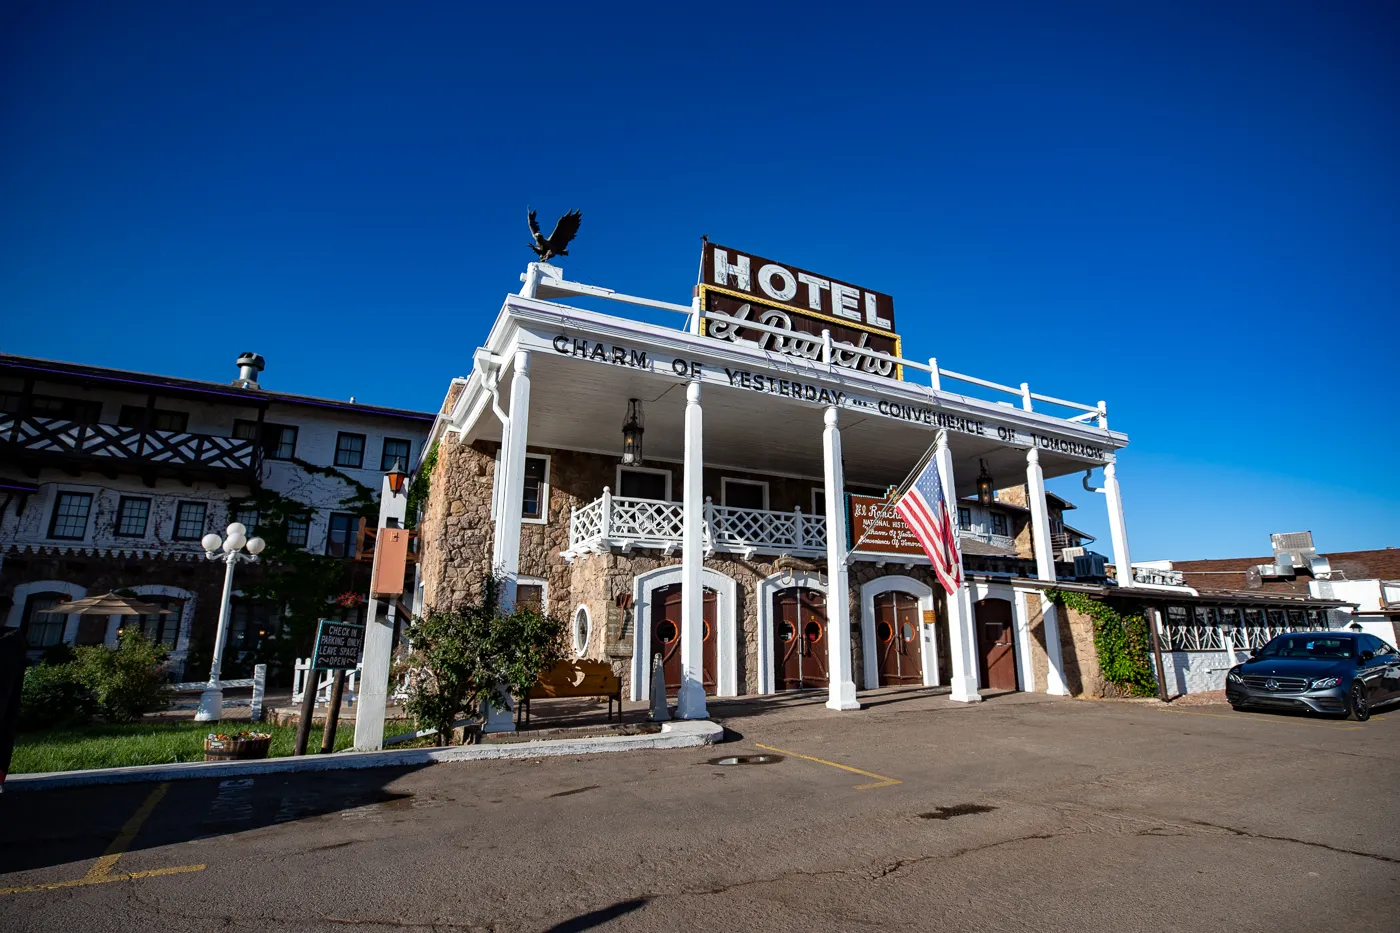 Historic El Rancho Hotel in Gallup, New Mexico - Route 66 Hotel